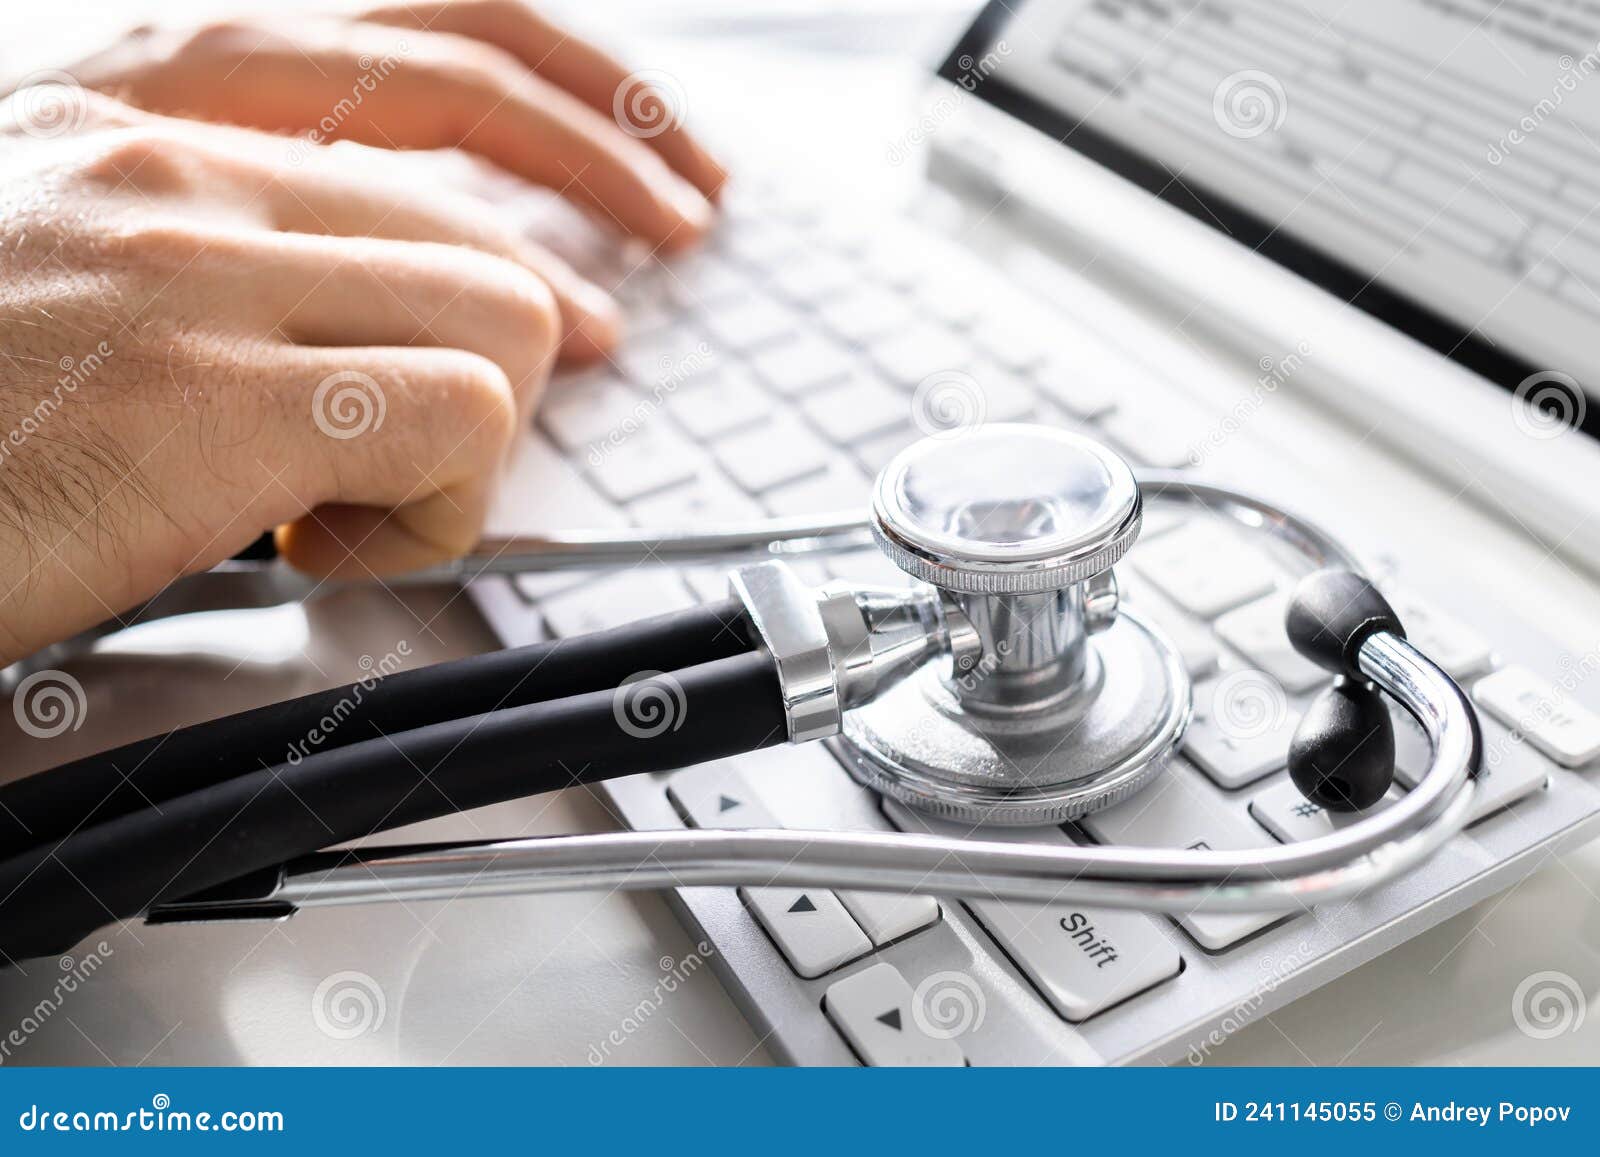 medical health diagnose software